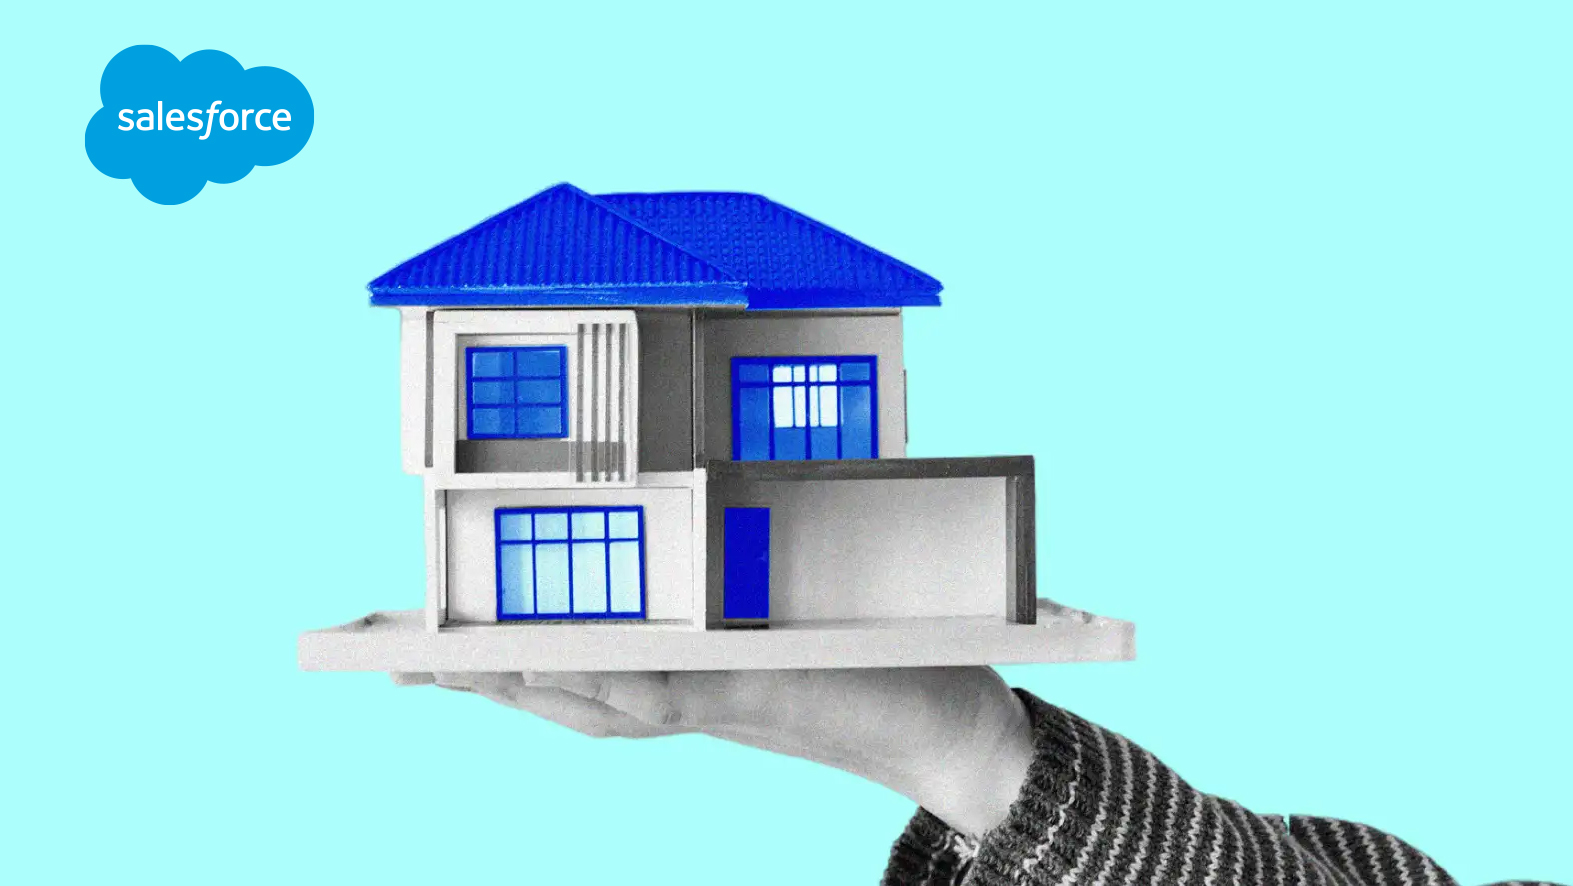 Real Estate - Application house - salesforce